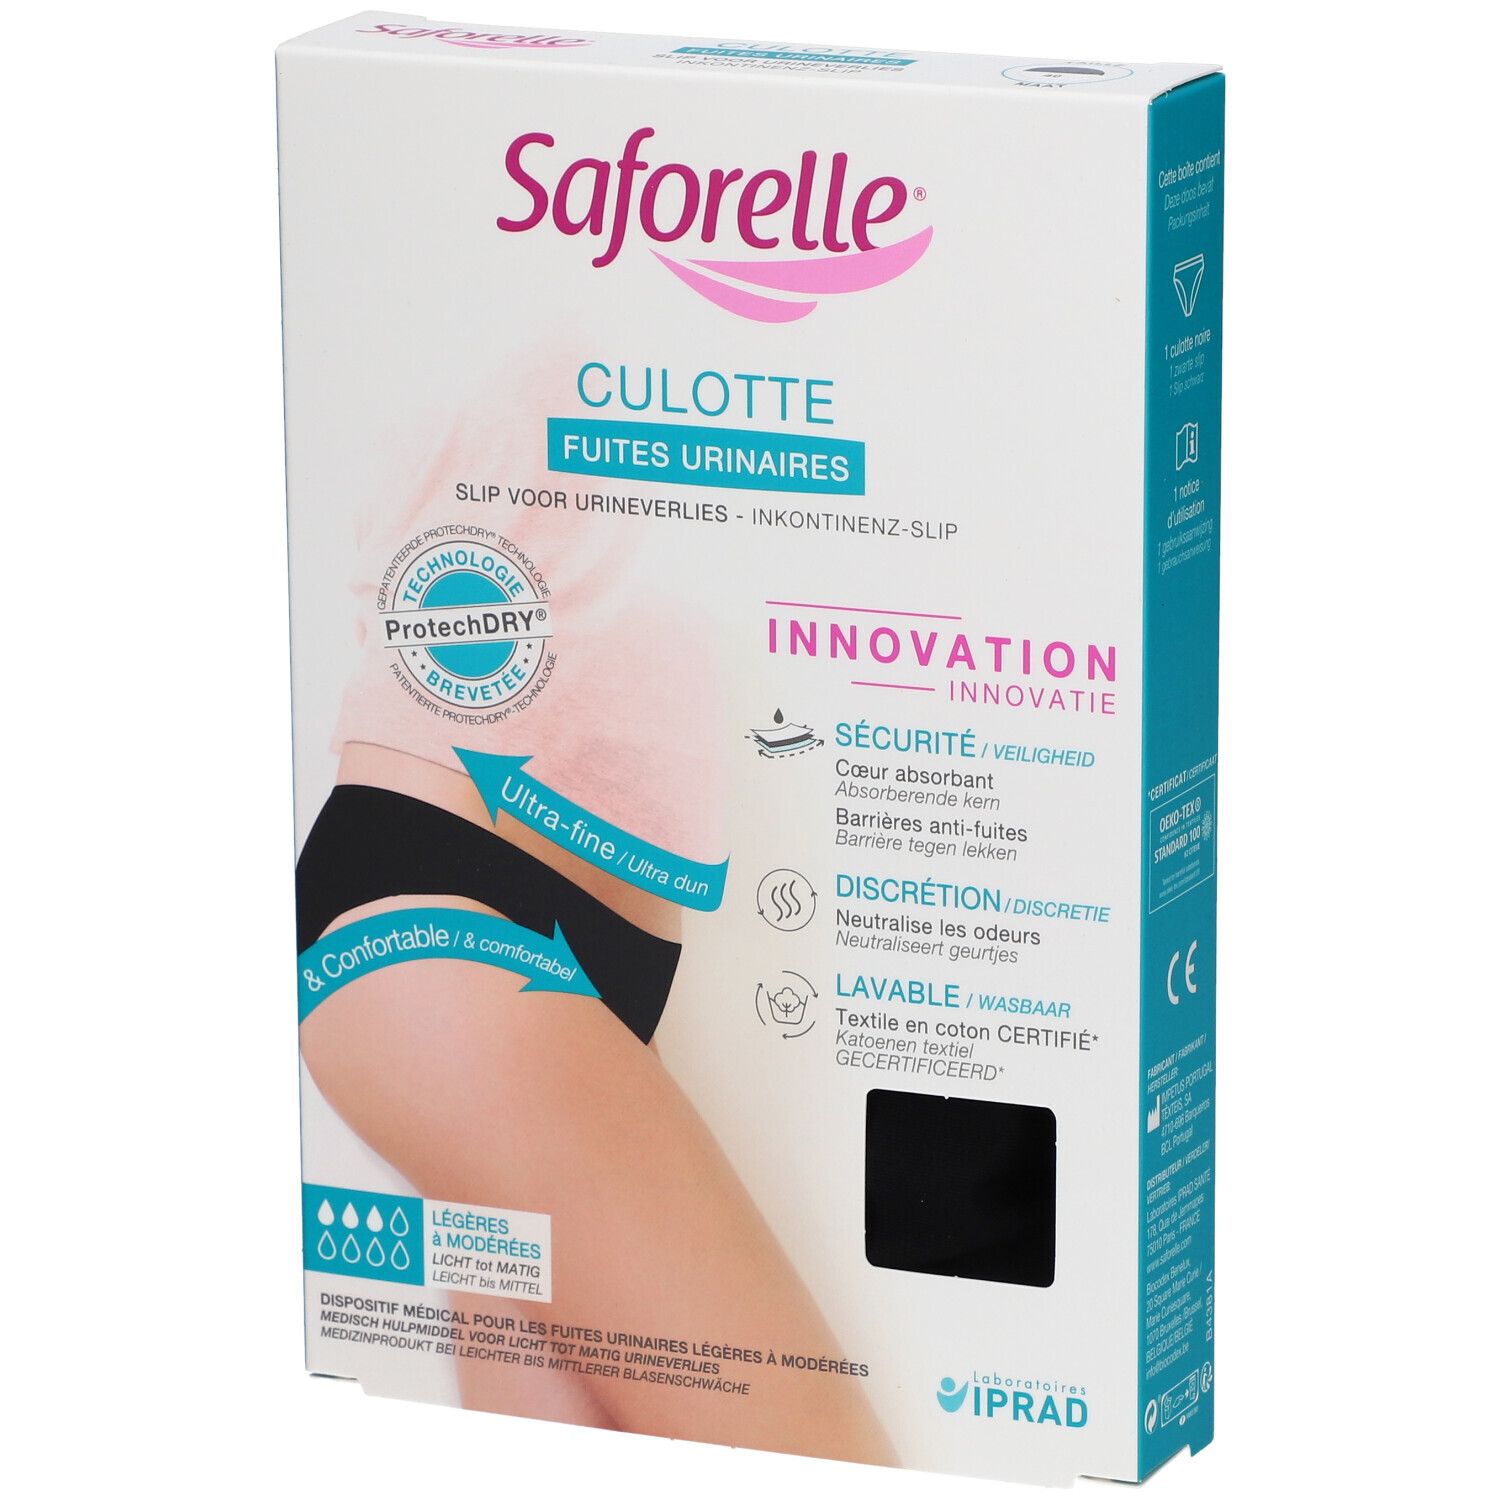 Saforelle® Culotte Fuites Urinaires Taille 40